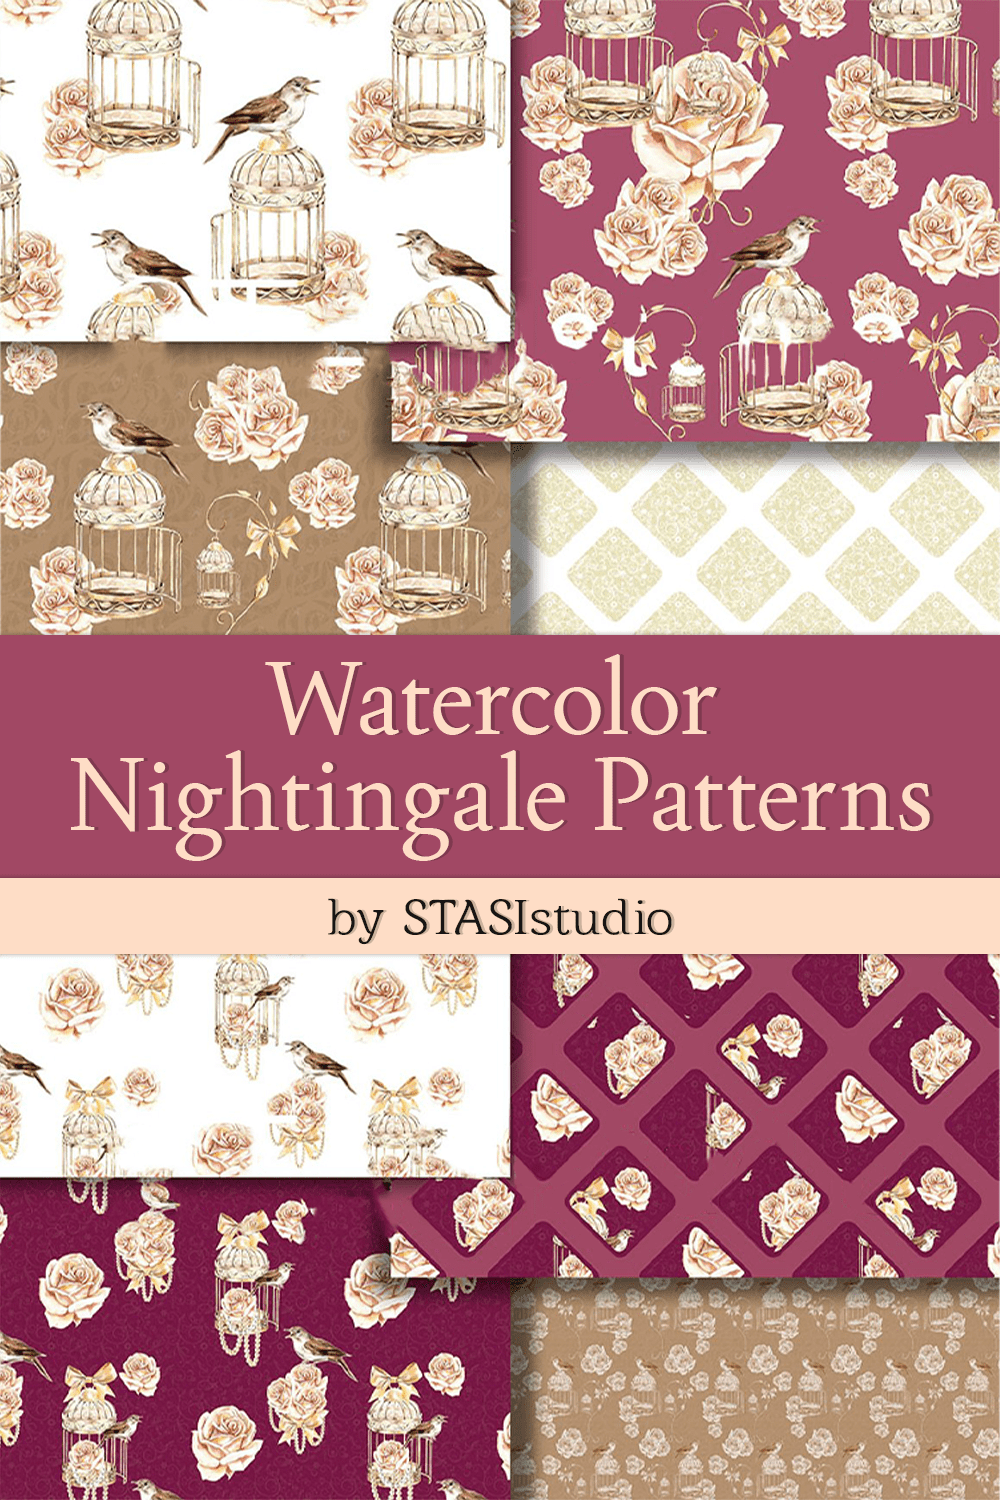 watercolor nightingale patterns pinterest